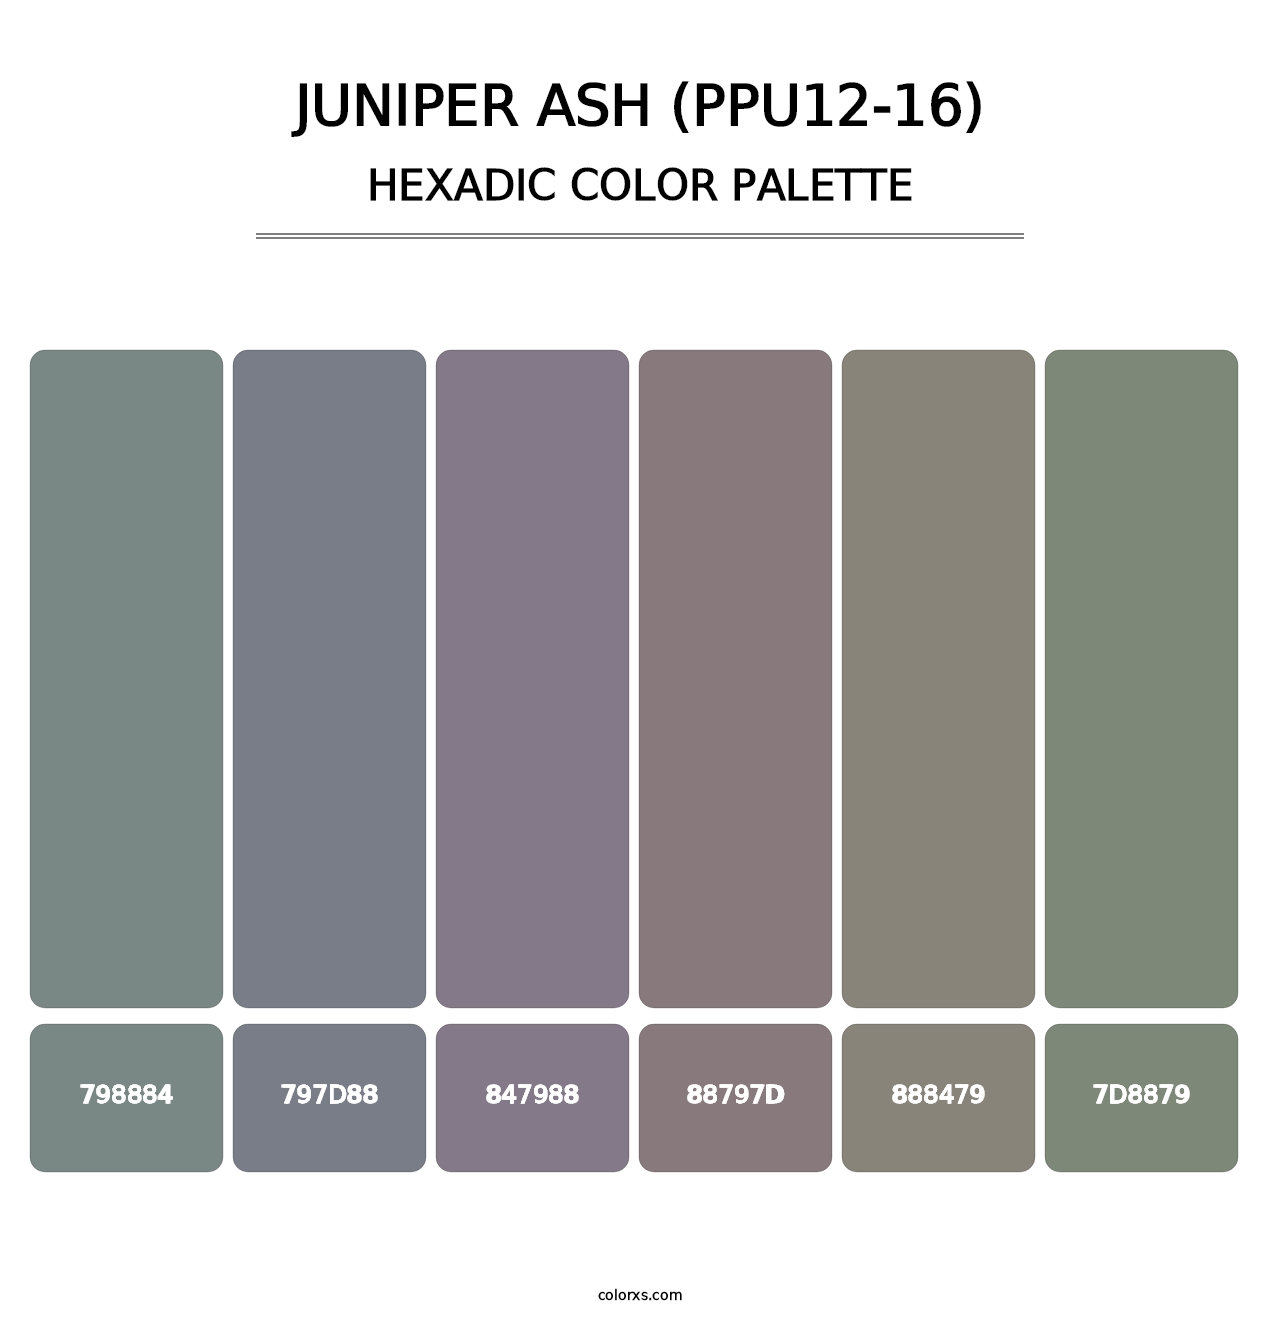 Juniper Ash (PPU12-16) - Hexadic Color Palette